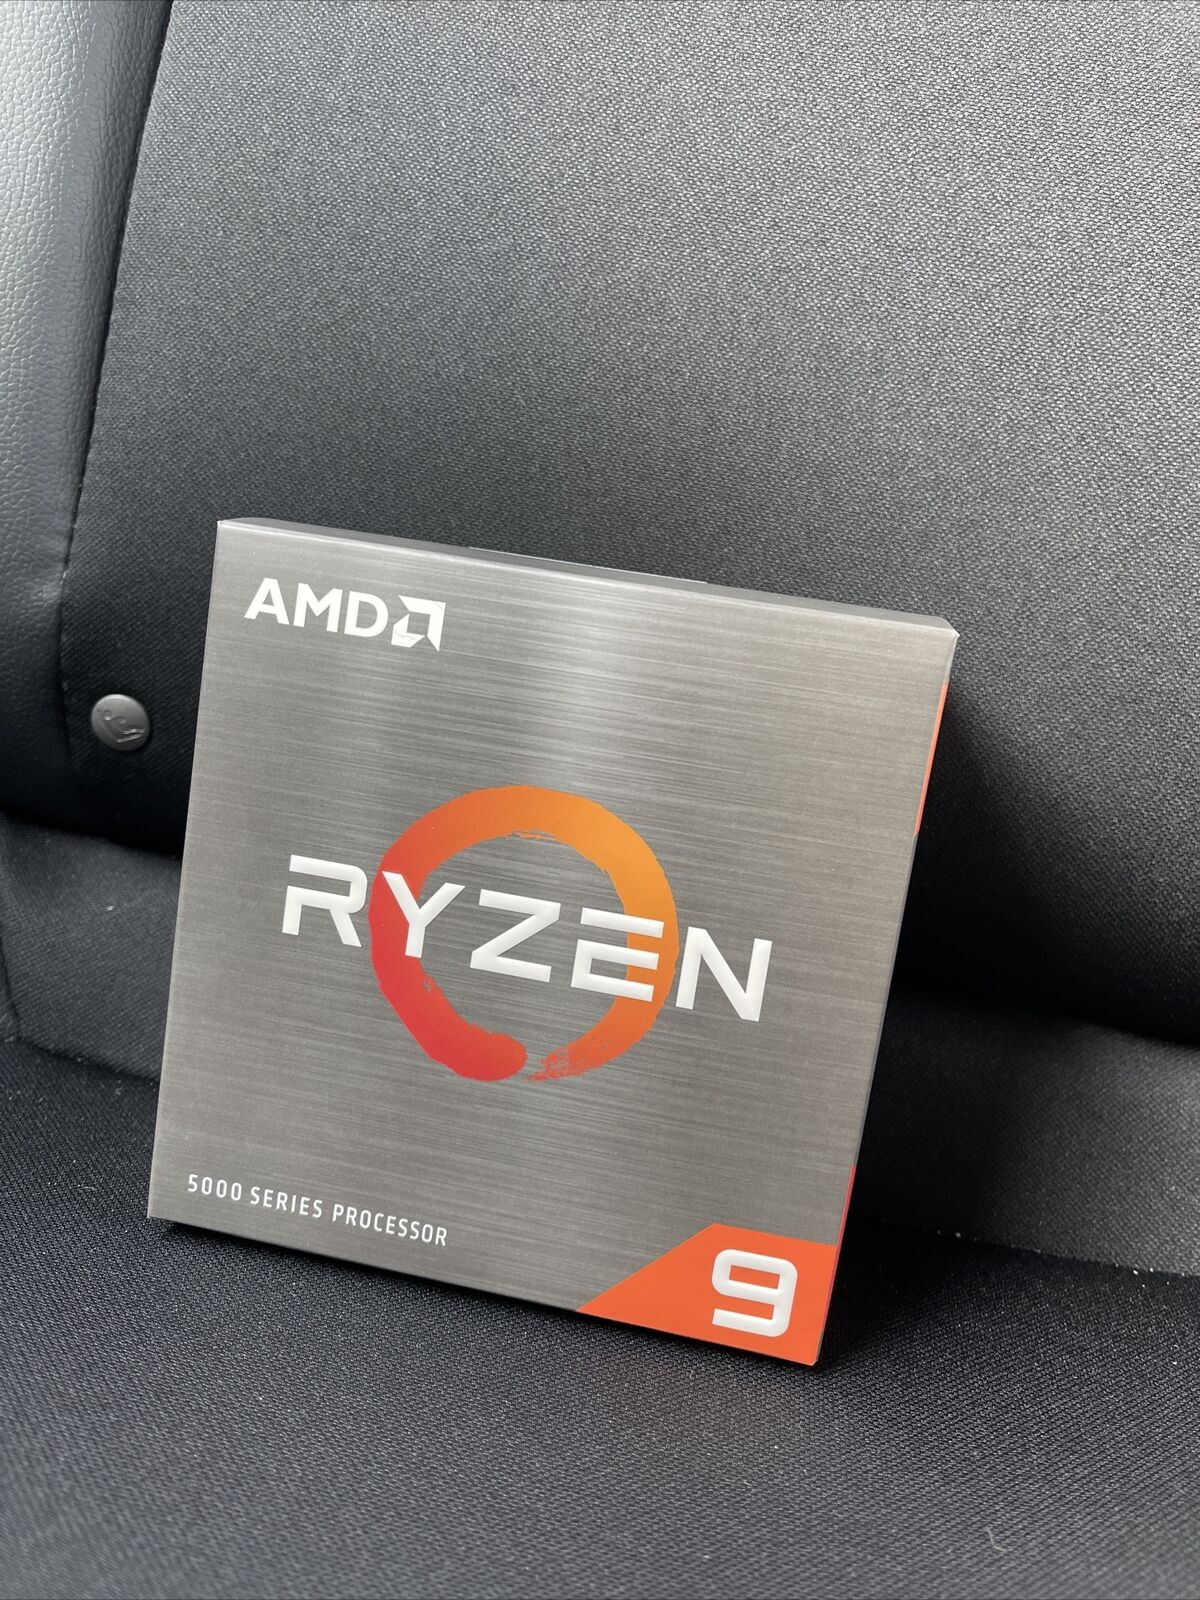 AMD Ryzen 9 5950X Processor (4.9GHz, 16 Cores, Socket AM4) Same DAY SHIPPING